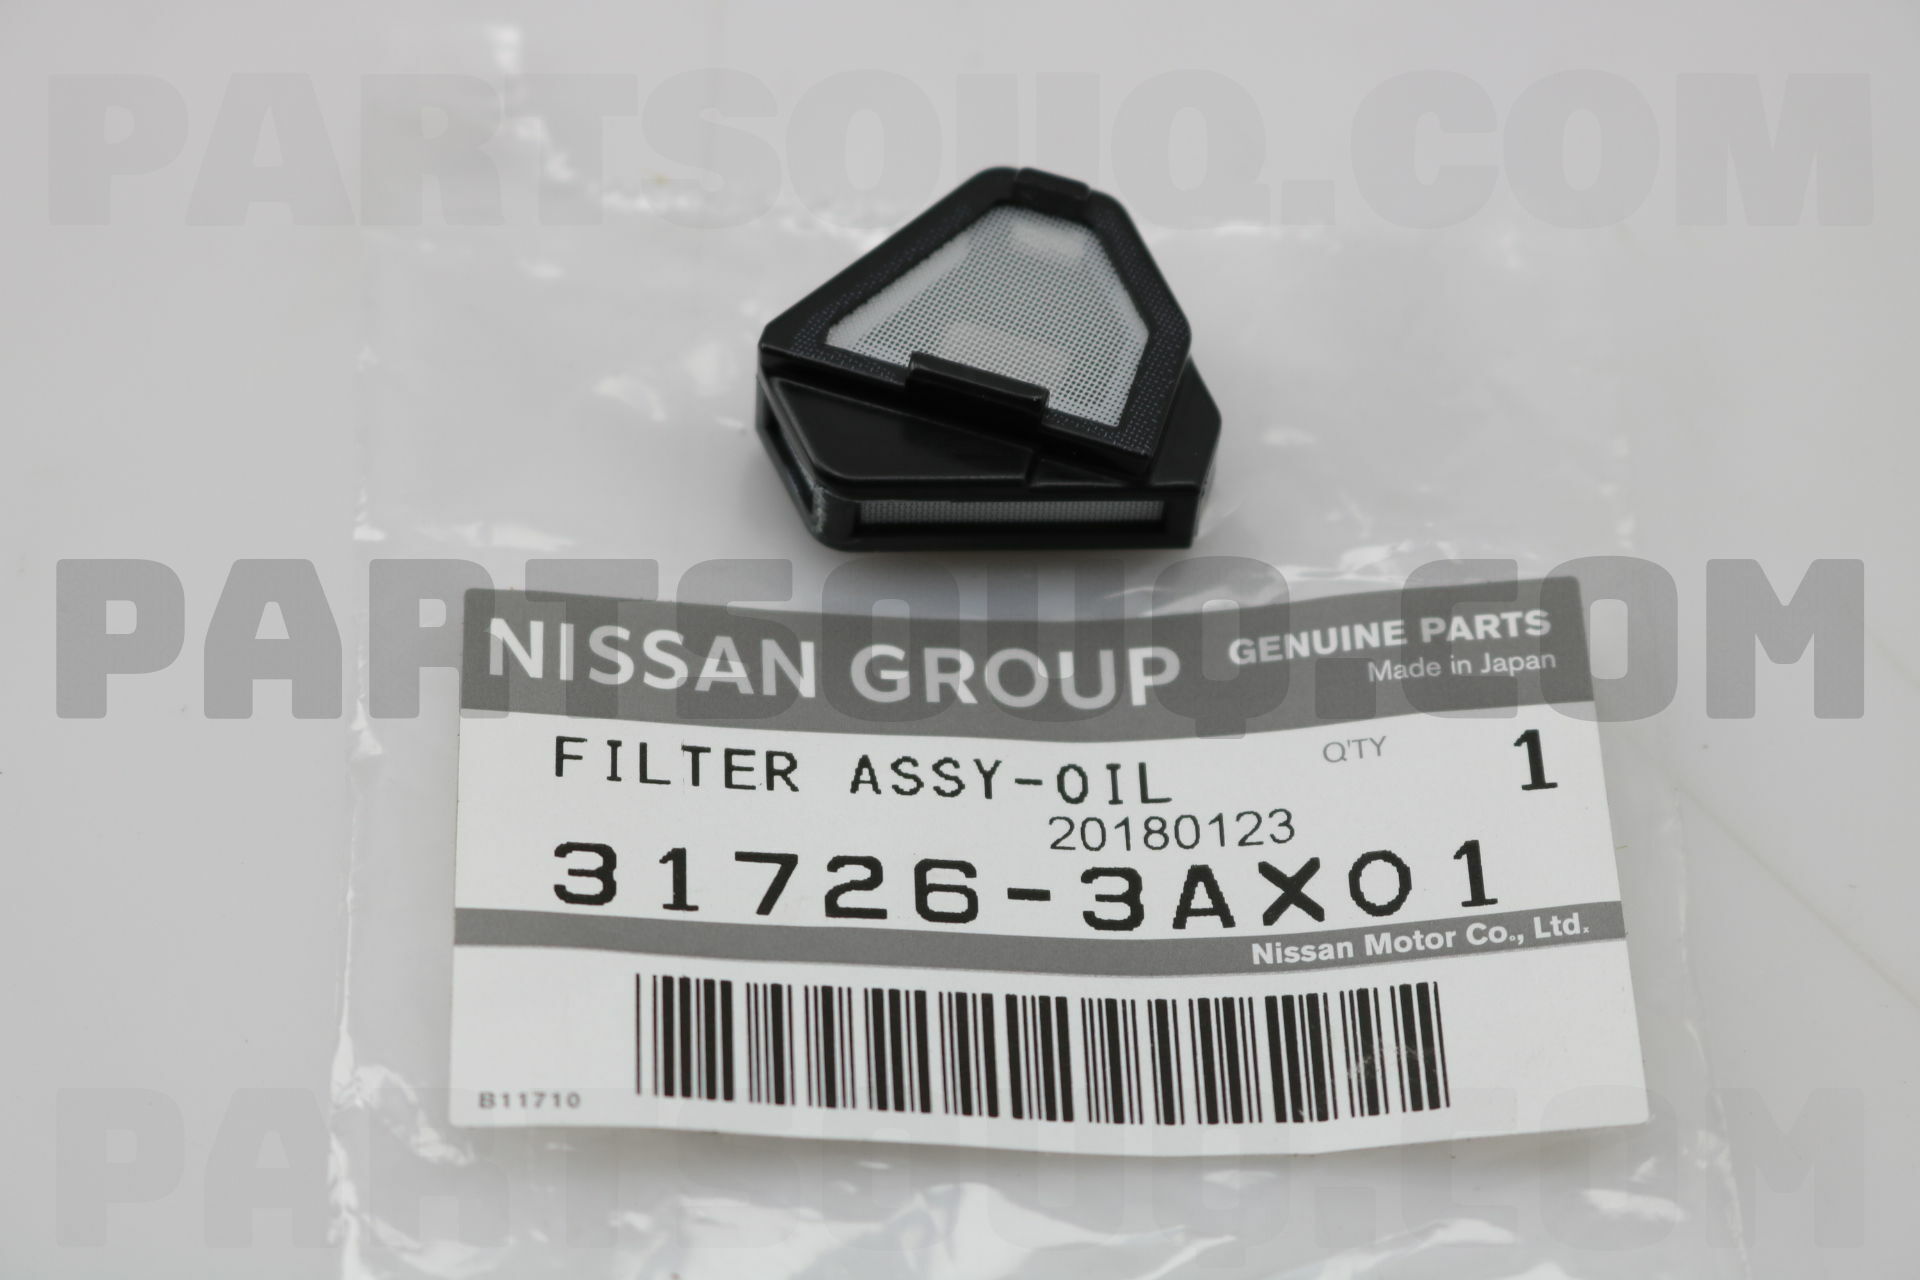 Auto Trans Filter Nissan 31726-3AX01 